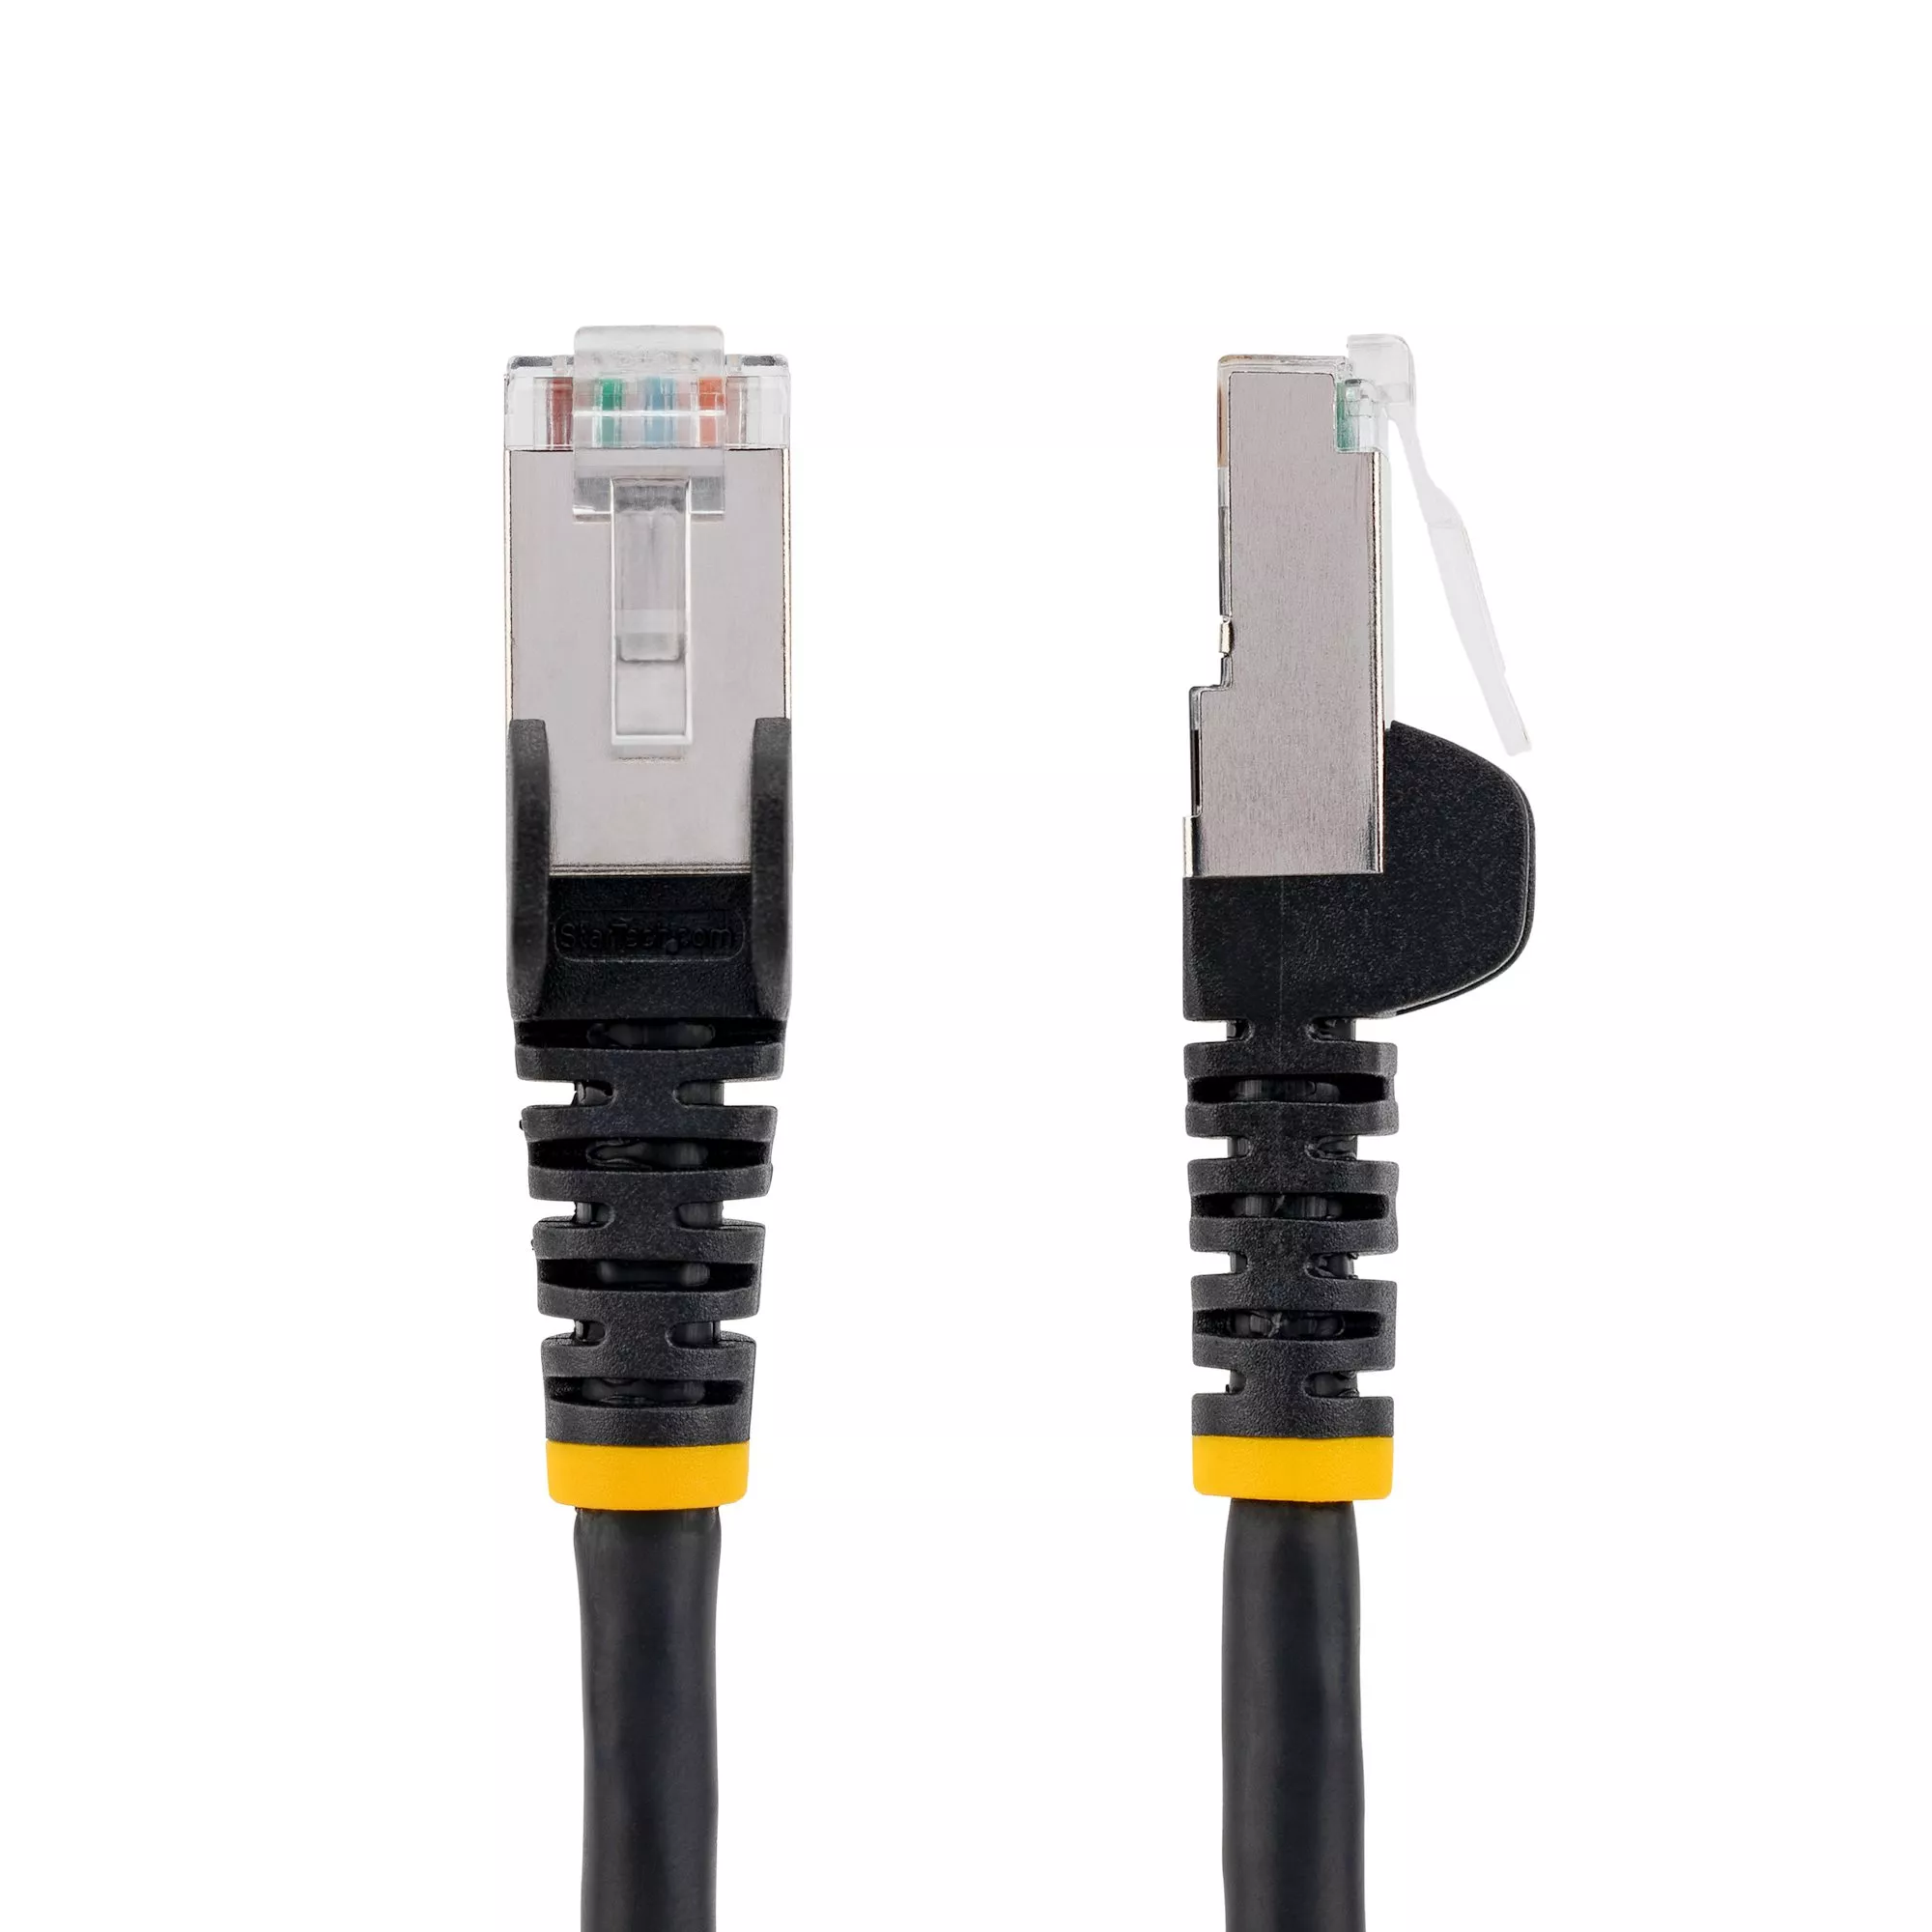 Vente StarTech.com Câble Ethernet CAT6a 3m - Low Smoke StarTech.com au meilleur prix - visuel 2